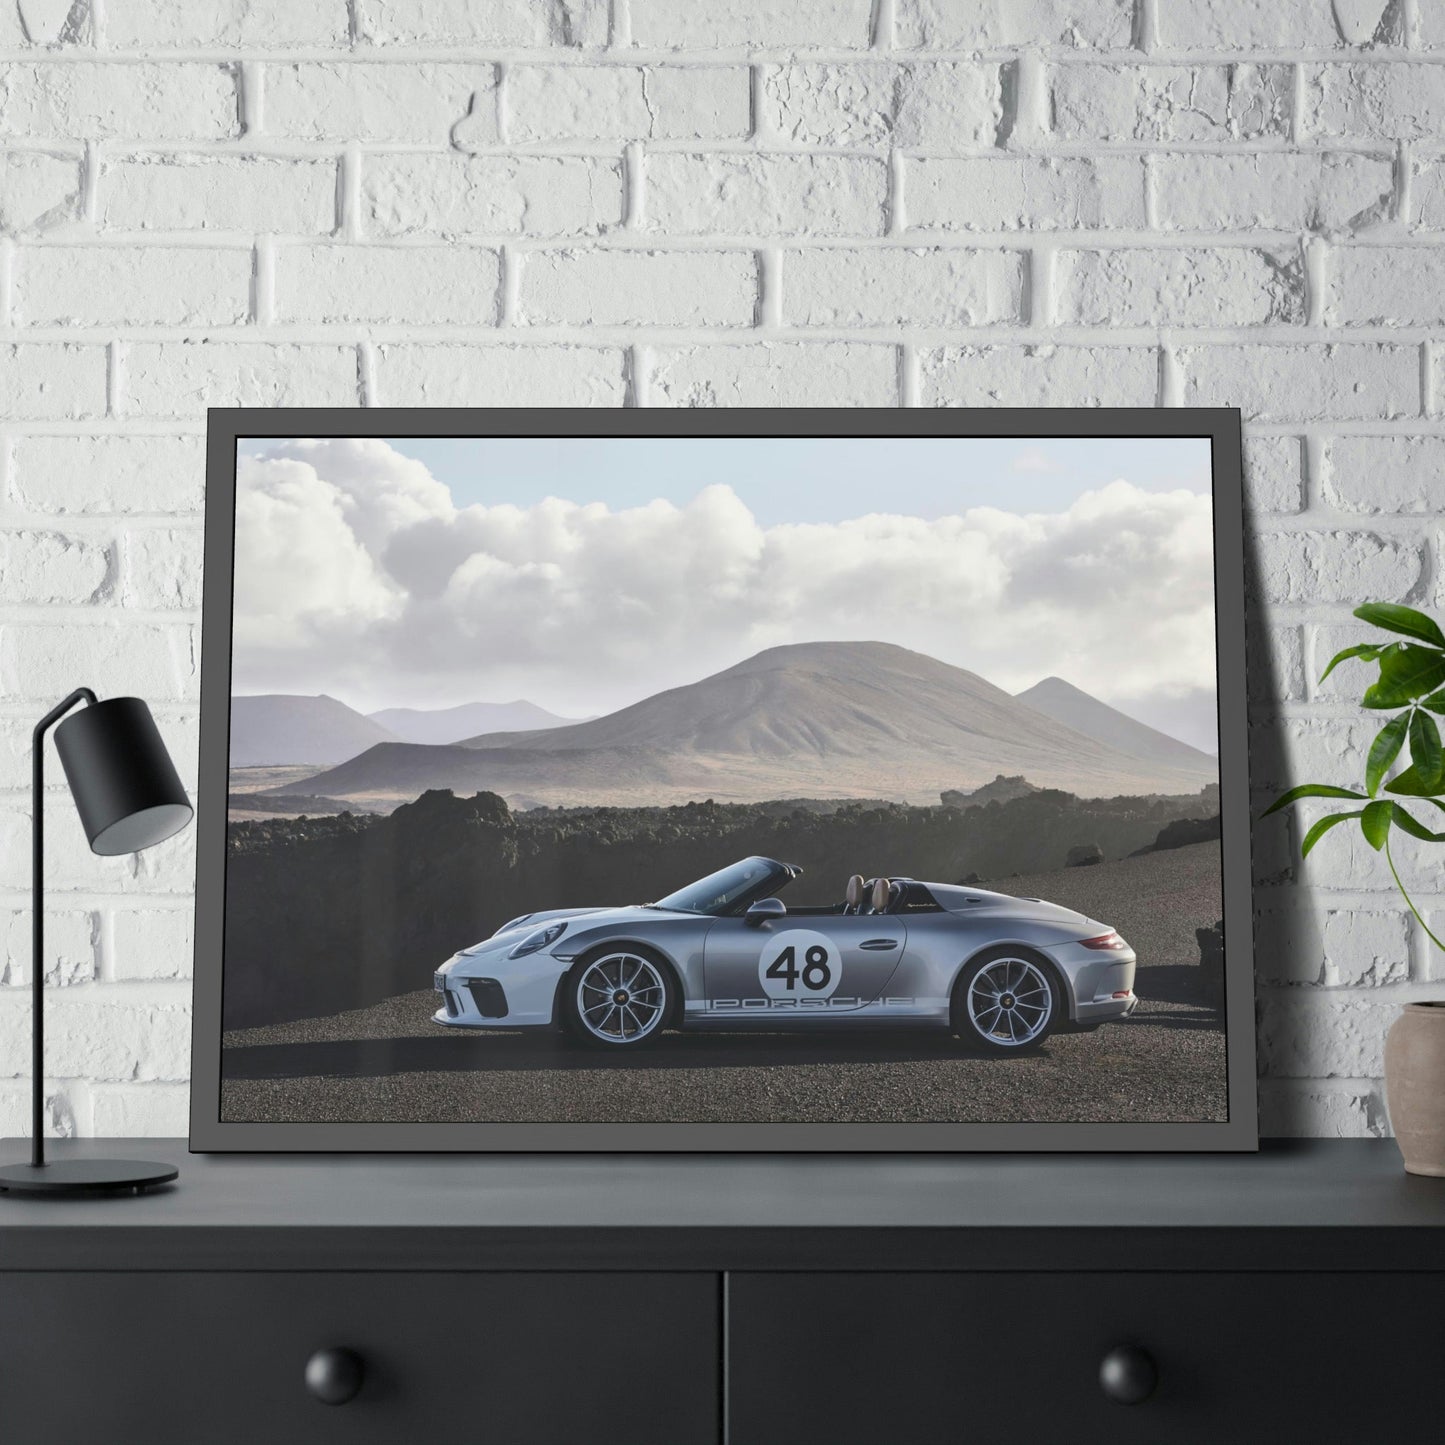 Precision in Motion: Porsche Art to Elevate Your Home Decor